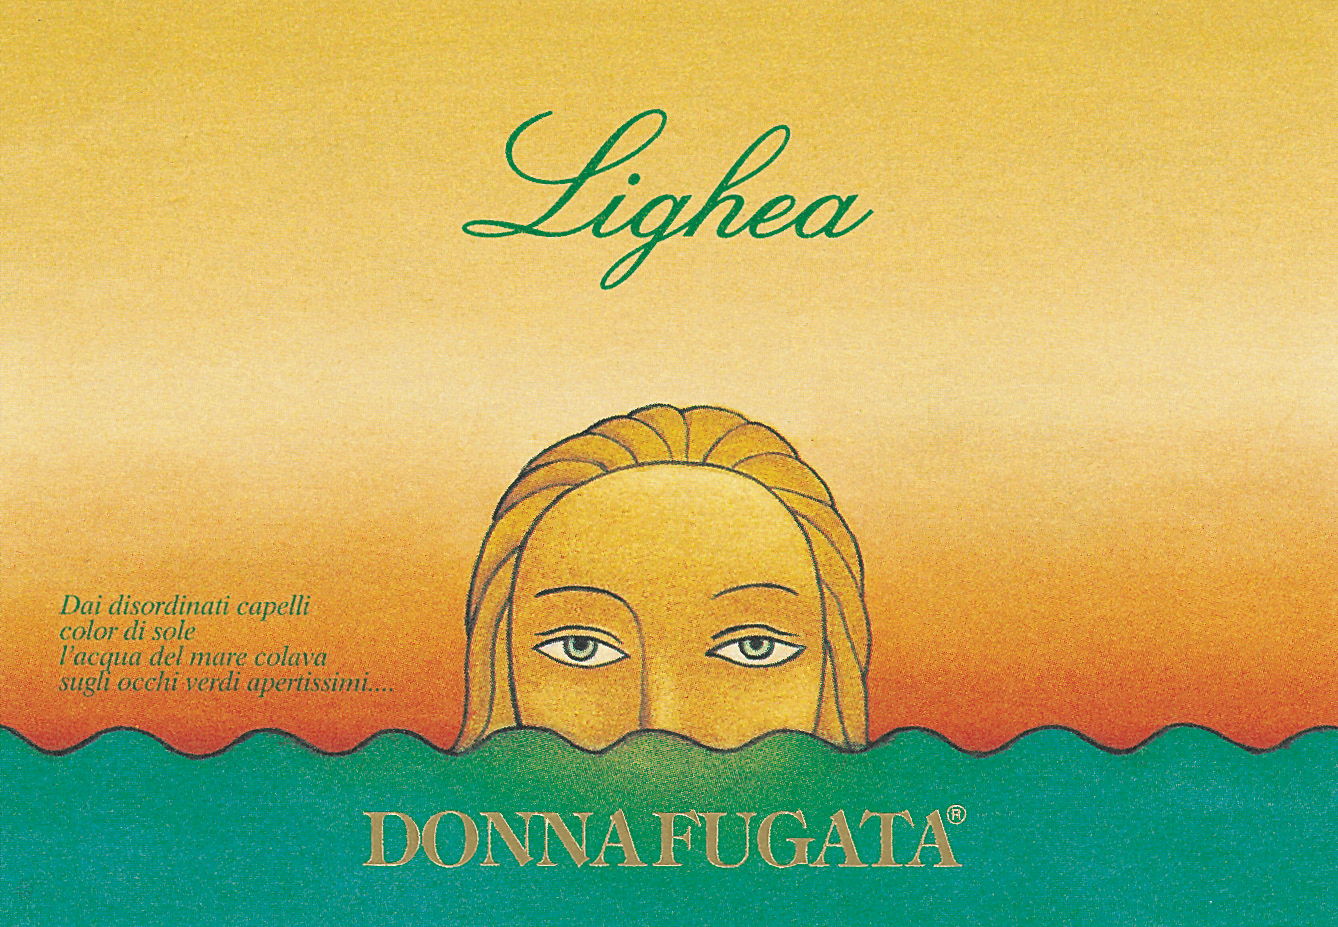 Donnafugata - Lighea label